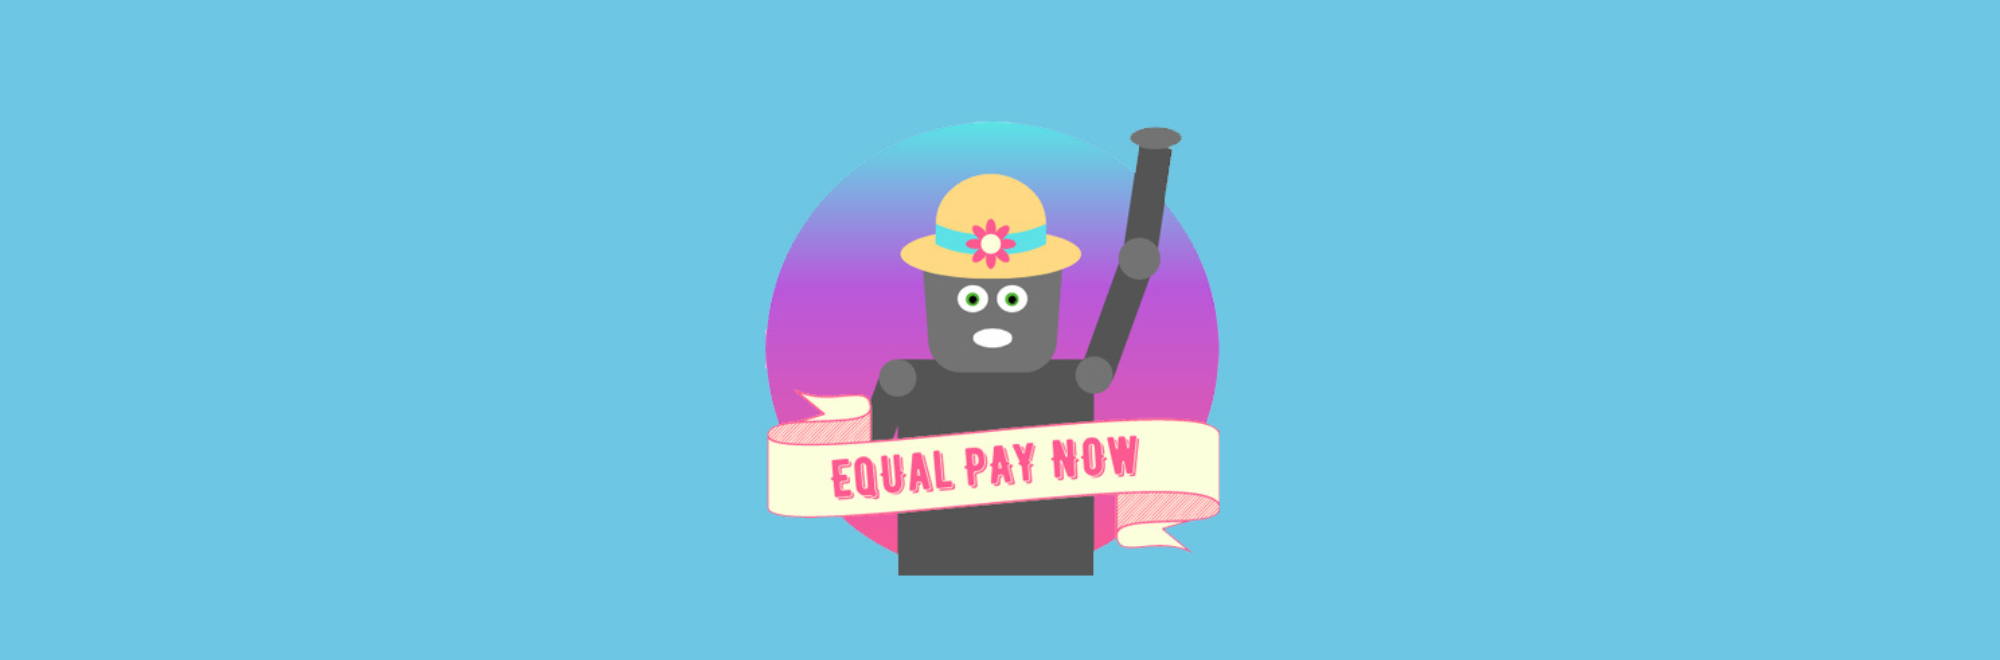 All hail the Gender Pay Gap Bot!